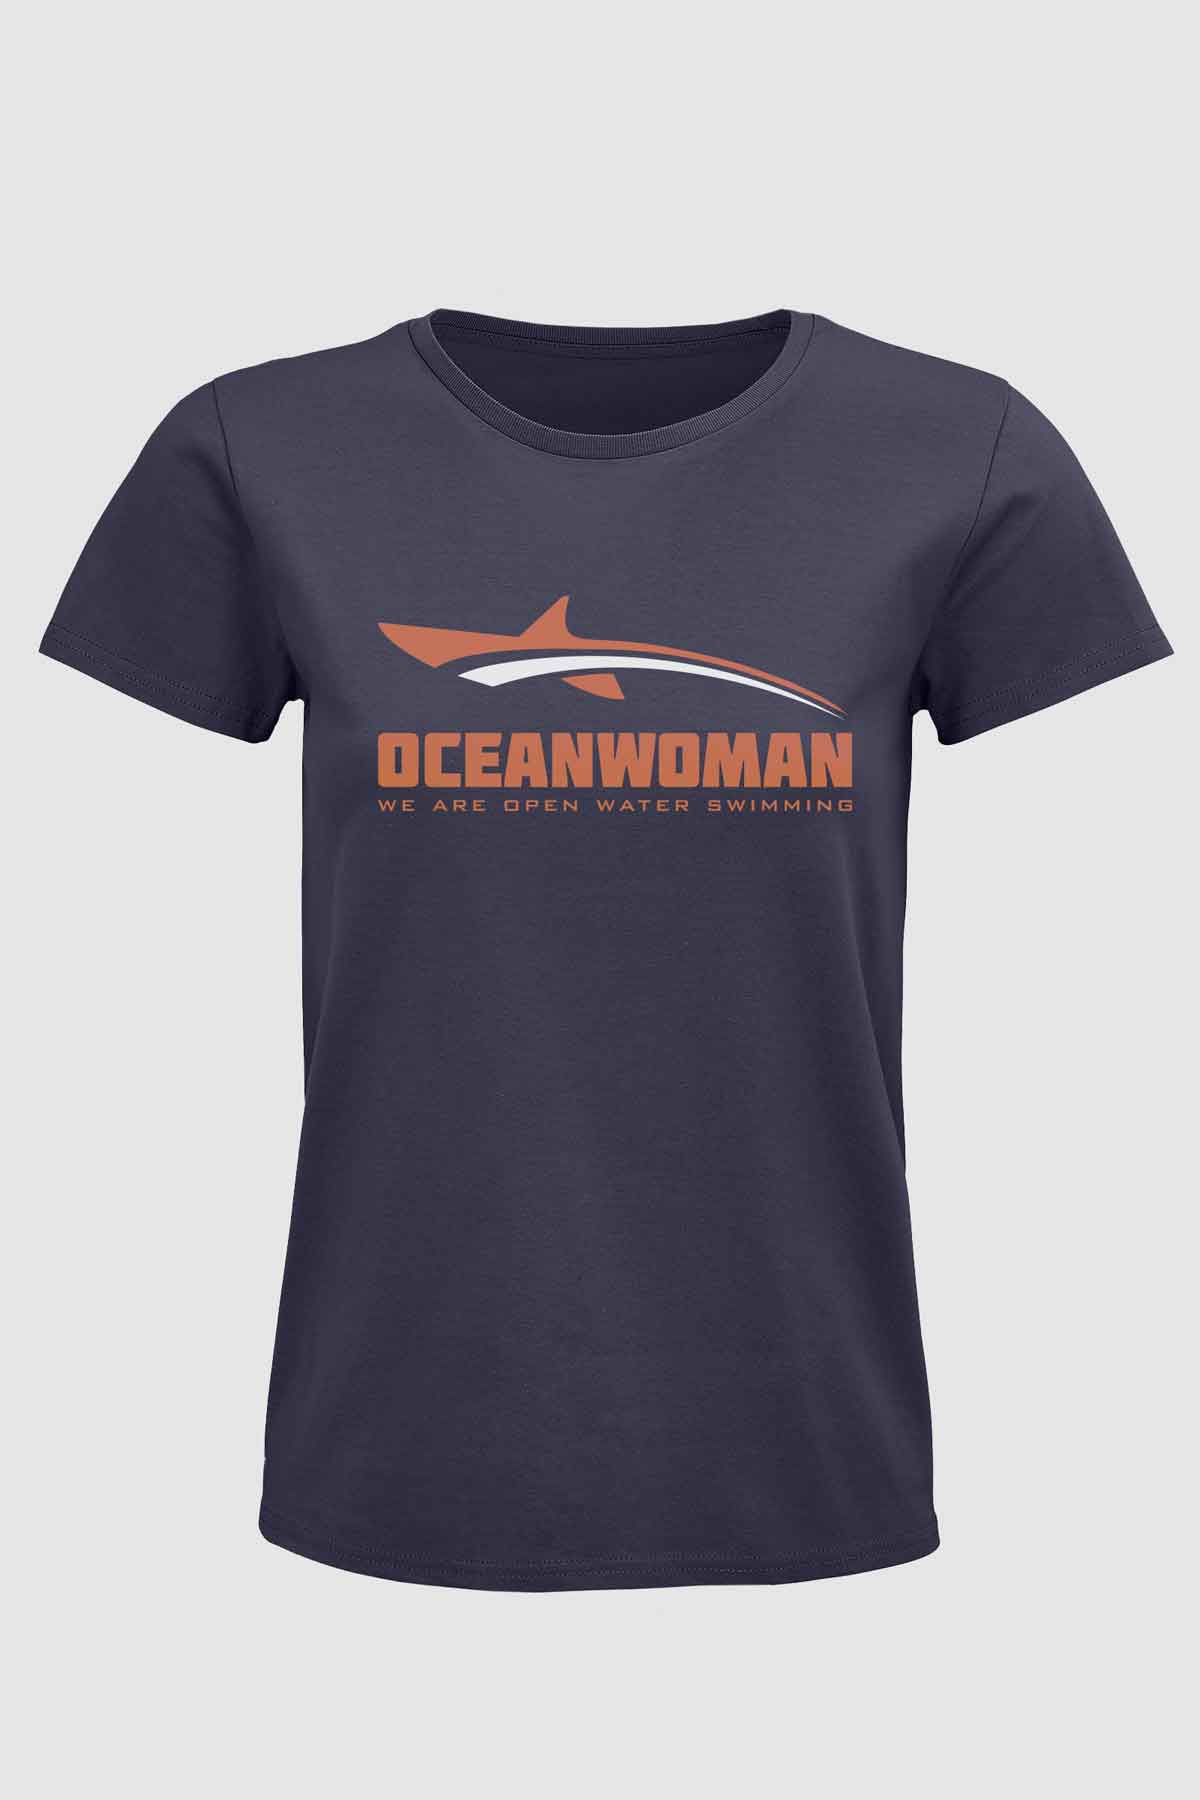 Oceanwoman icon t shirt woman grey